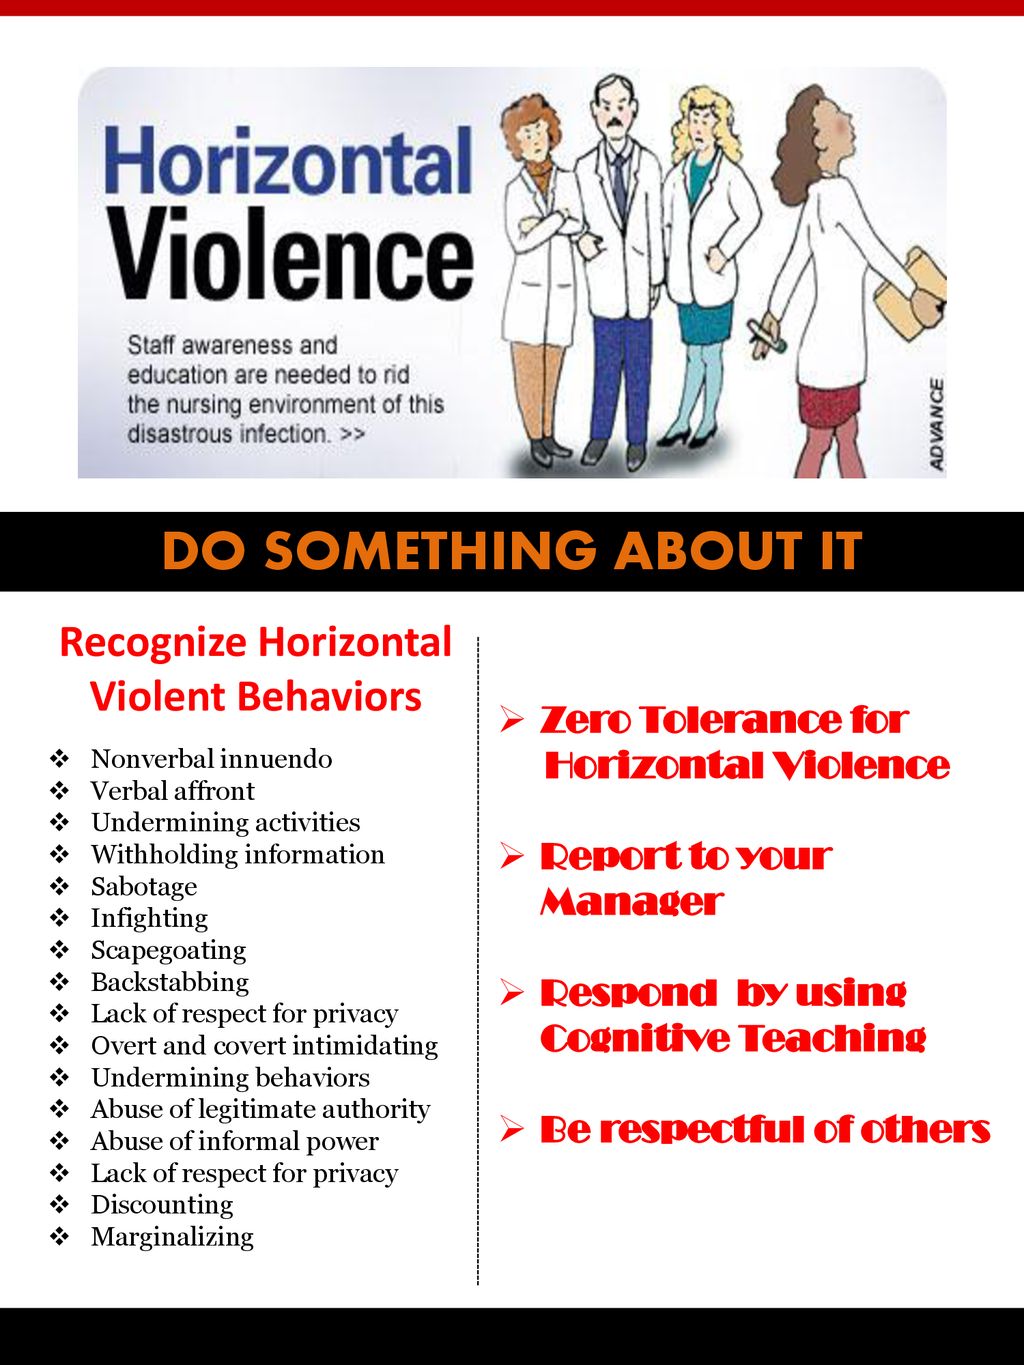 Recognize Horizontal Violent Behaviors